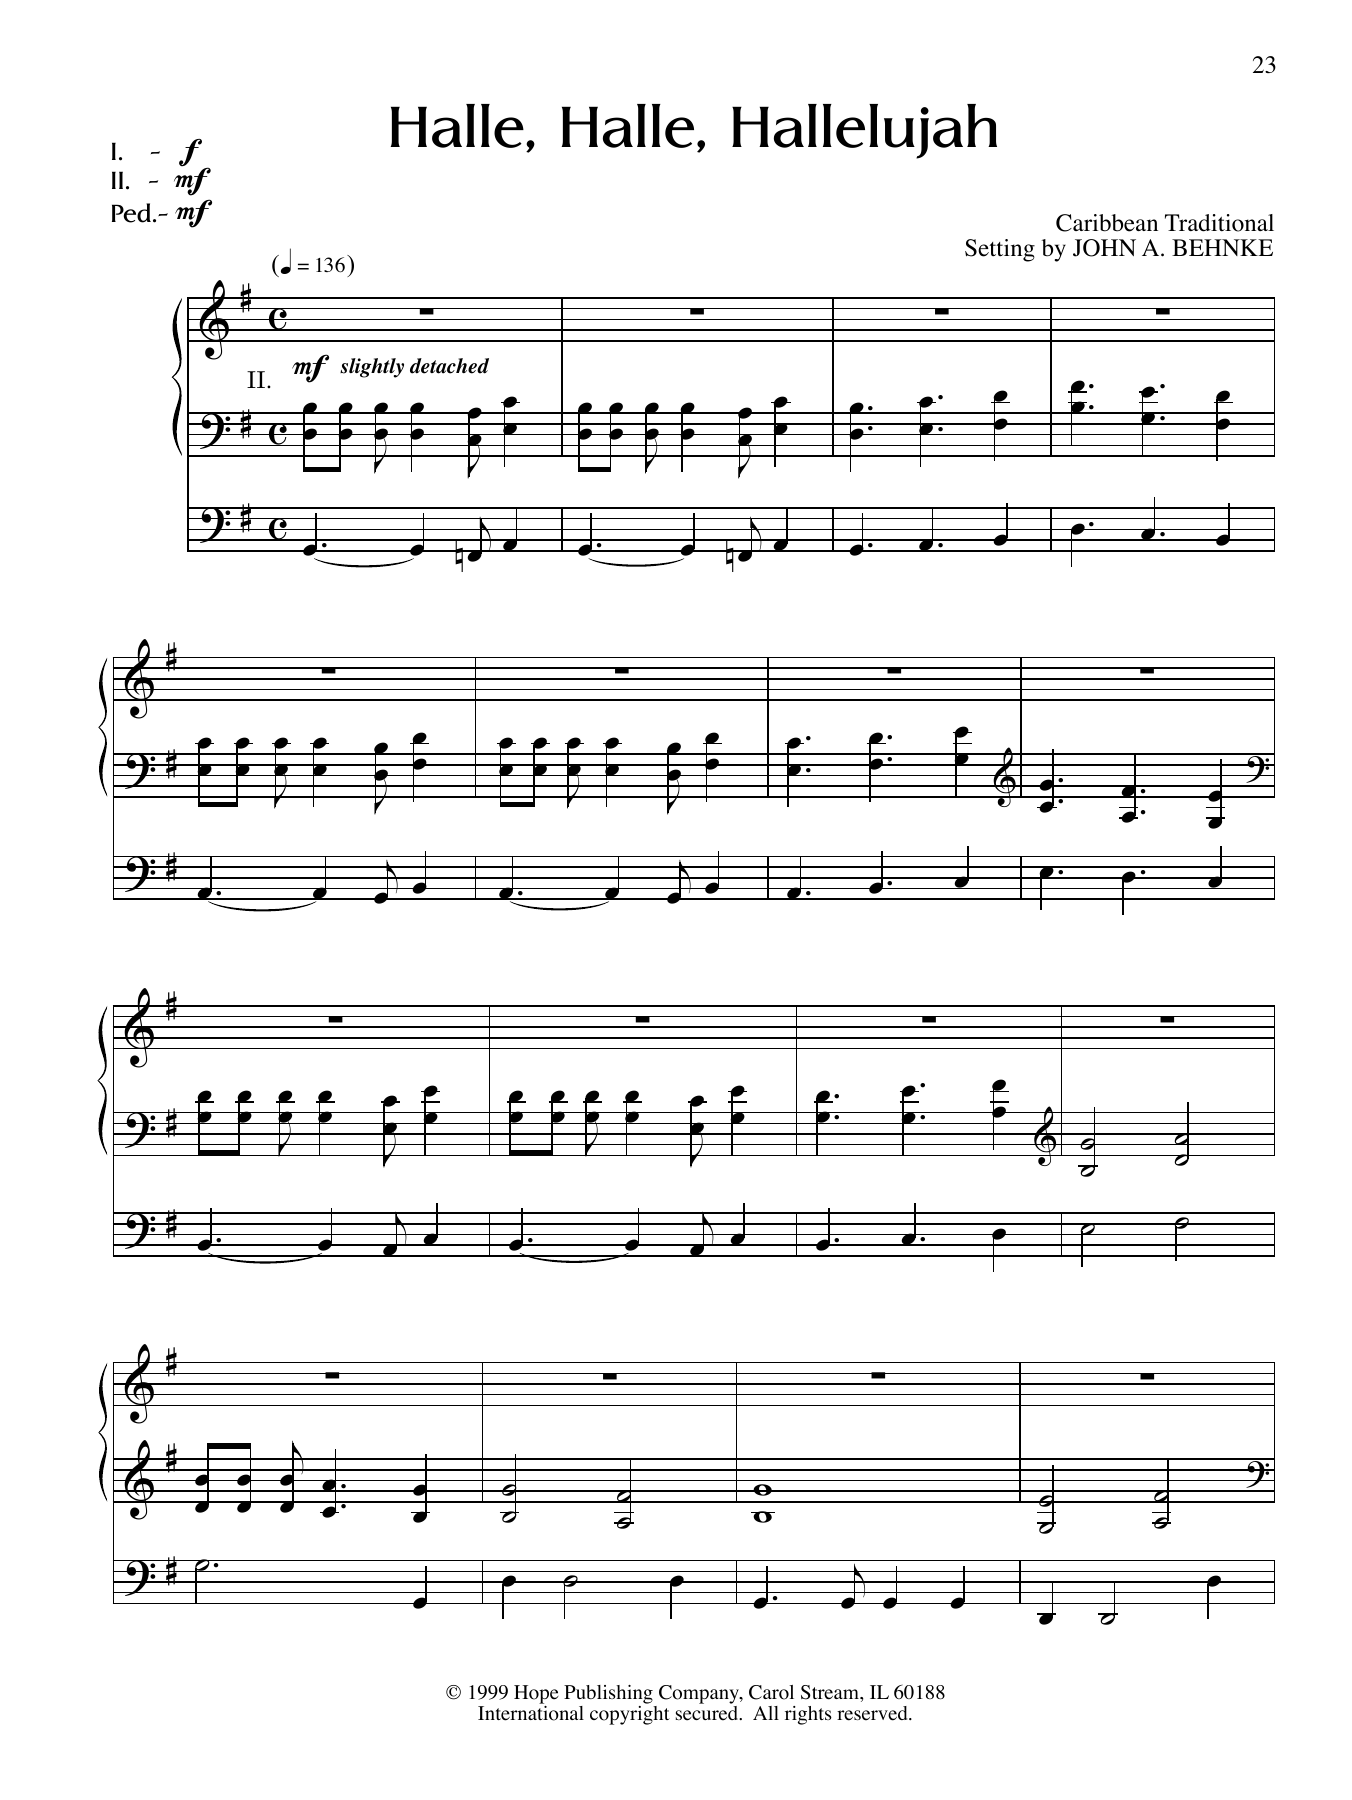 John A. Behnke Halle, Halle, Hallelujah Sheet Music Notes & Chords for Organ - Download or Print PDF